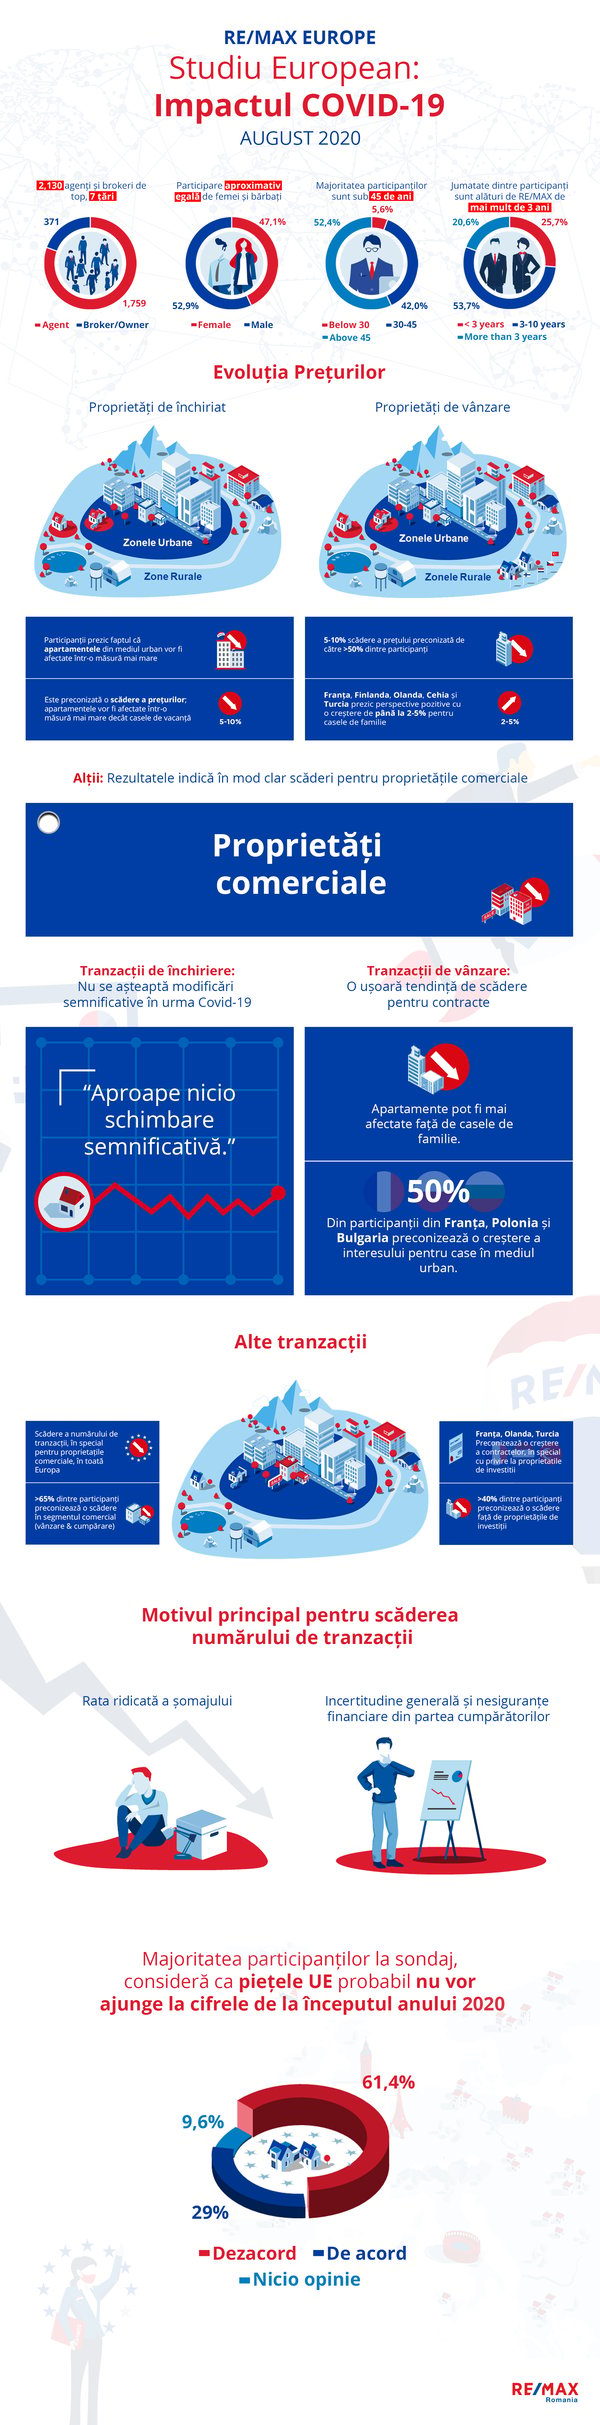 infografic piata imobiliara europeana in 2020 - studiu remax